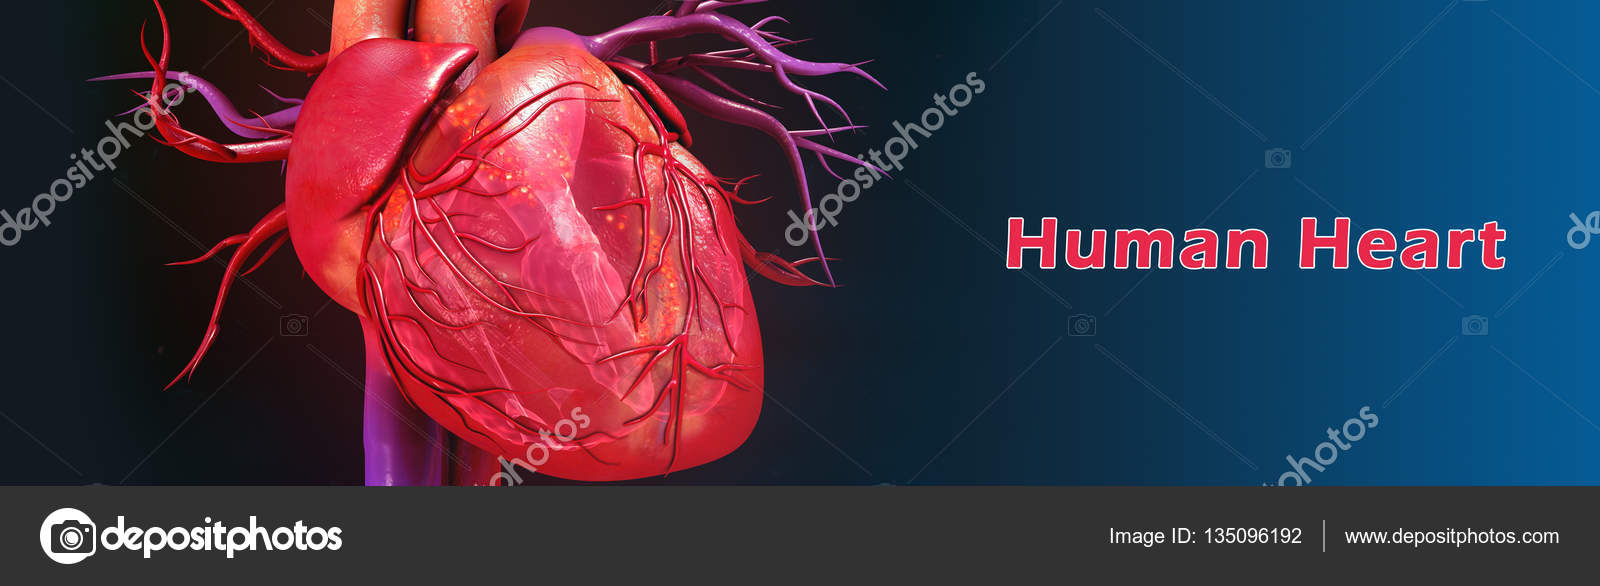 Heart anatomy illustration Stock Photo by ©sciencepics 135096192